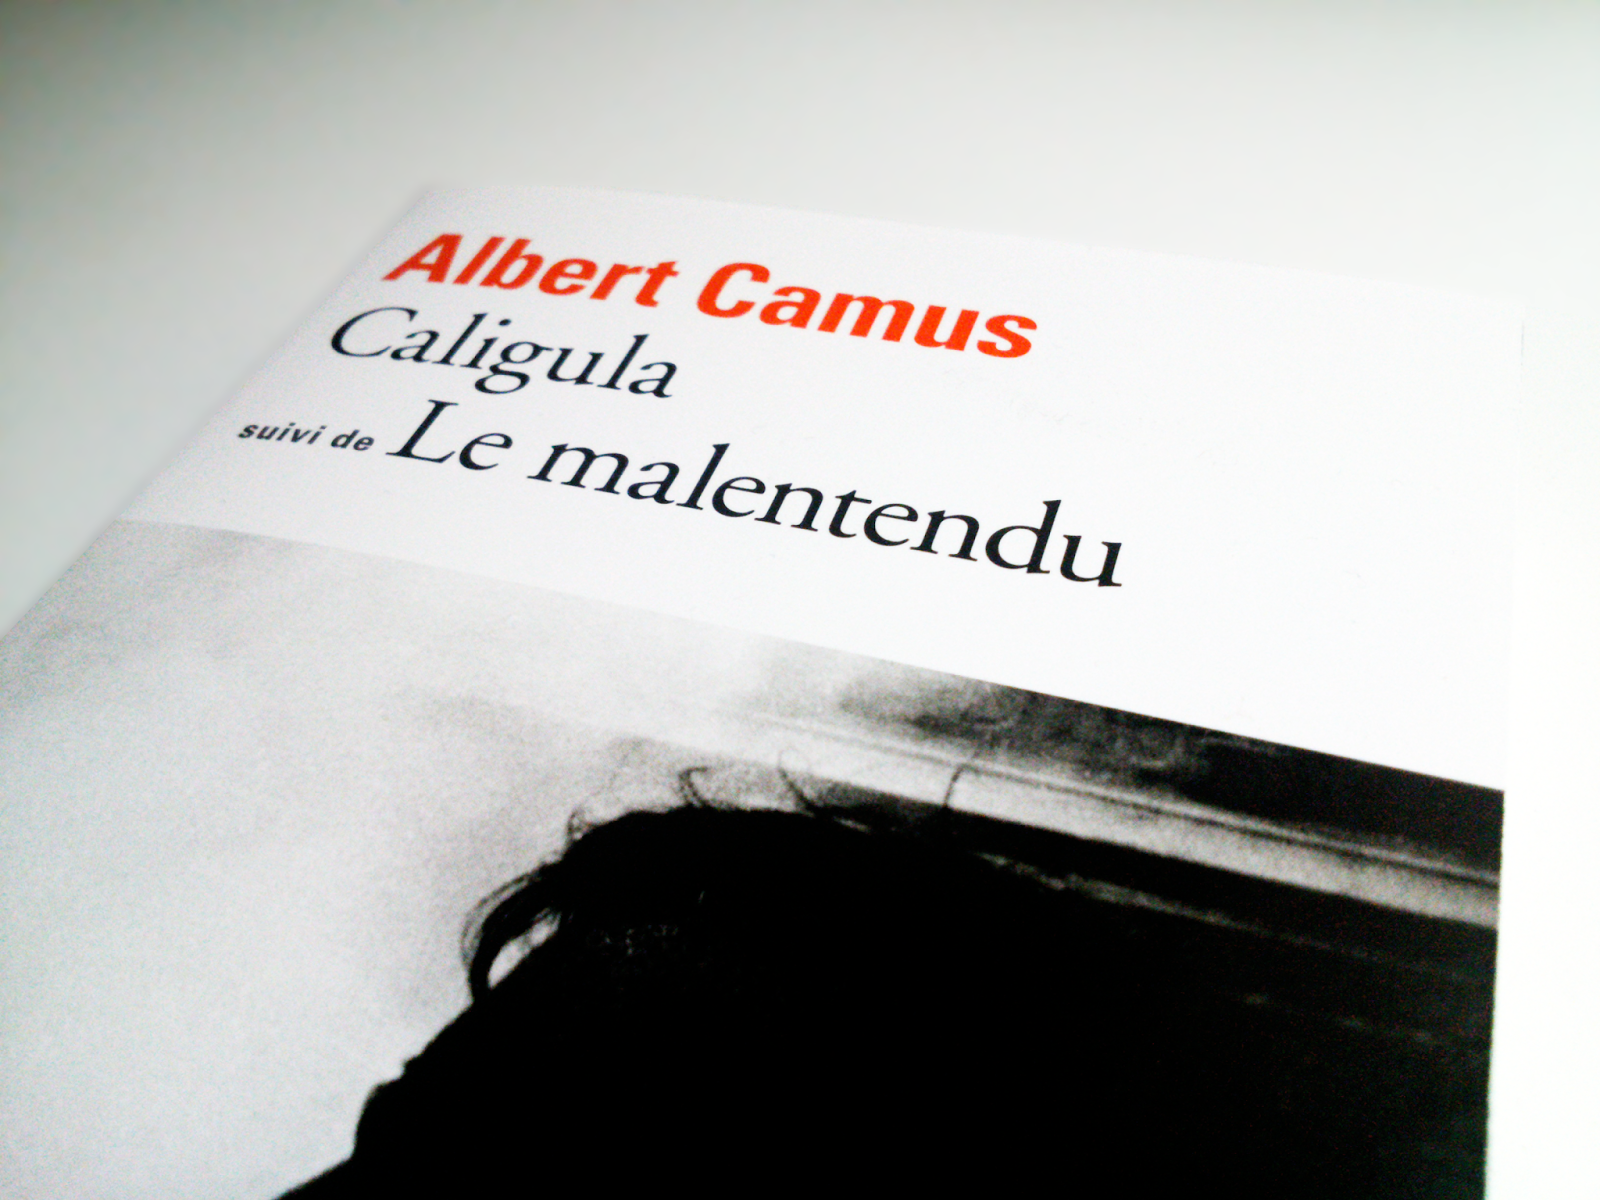 Caligula, Le Malentendu [Albert Camus]